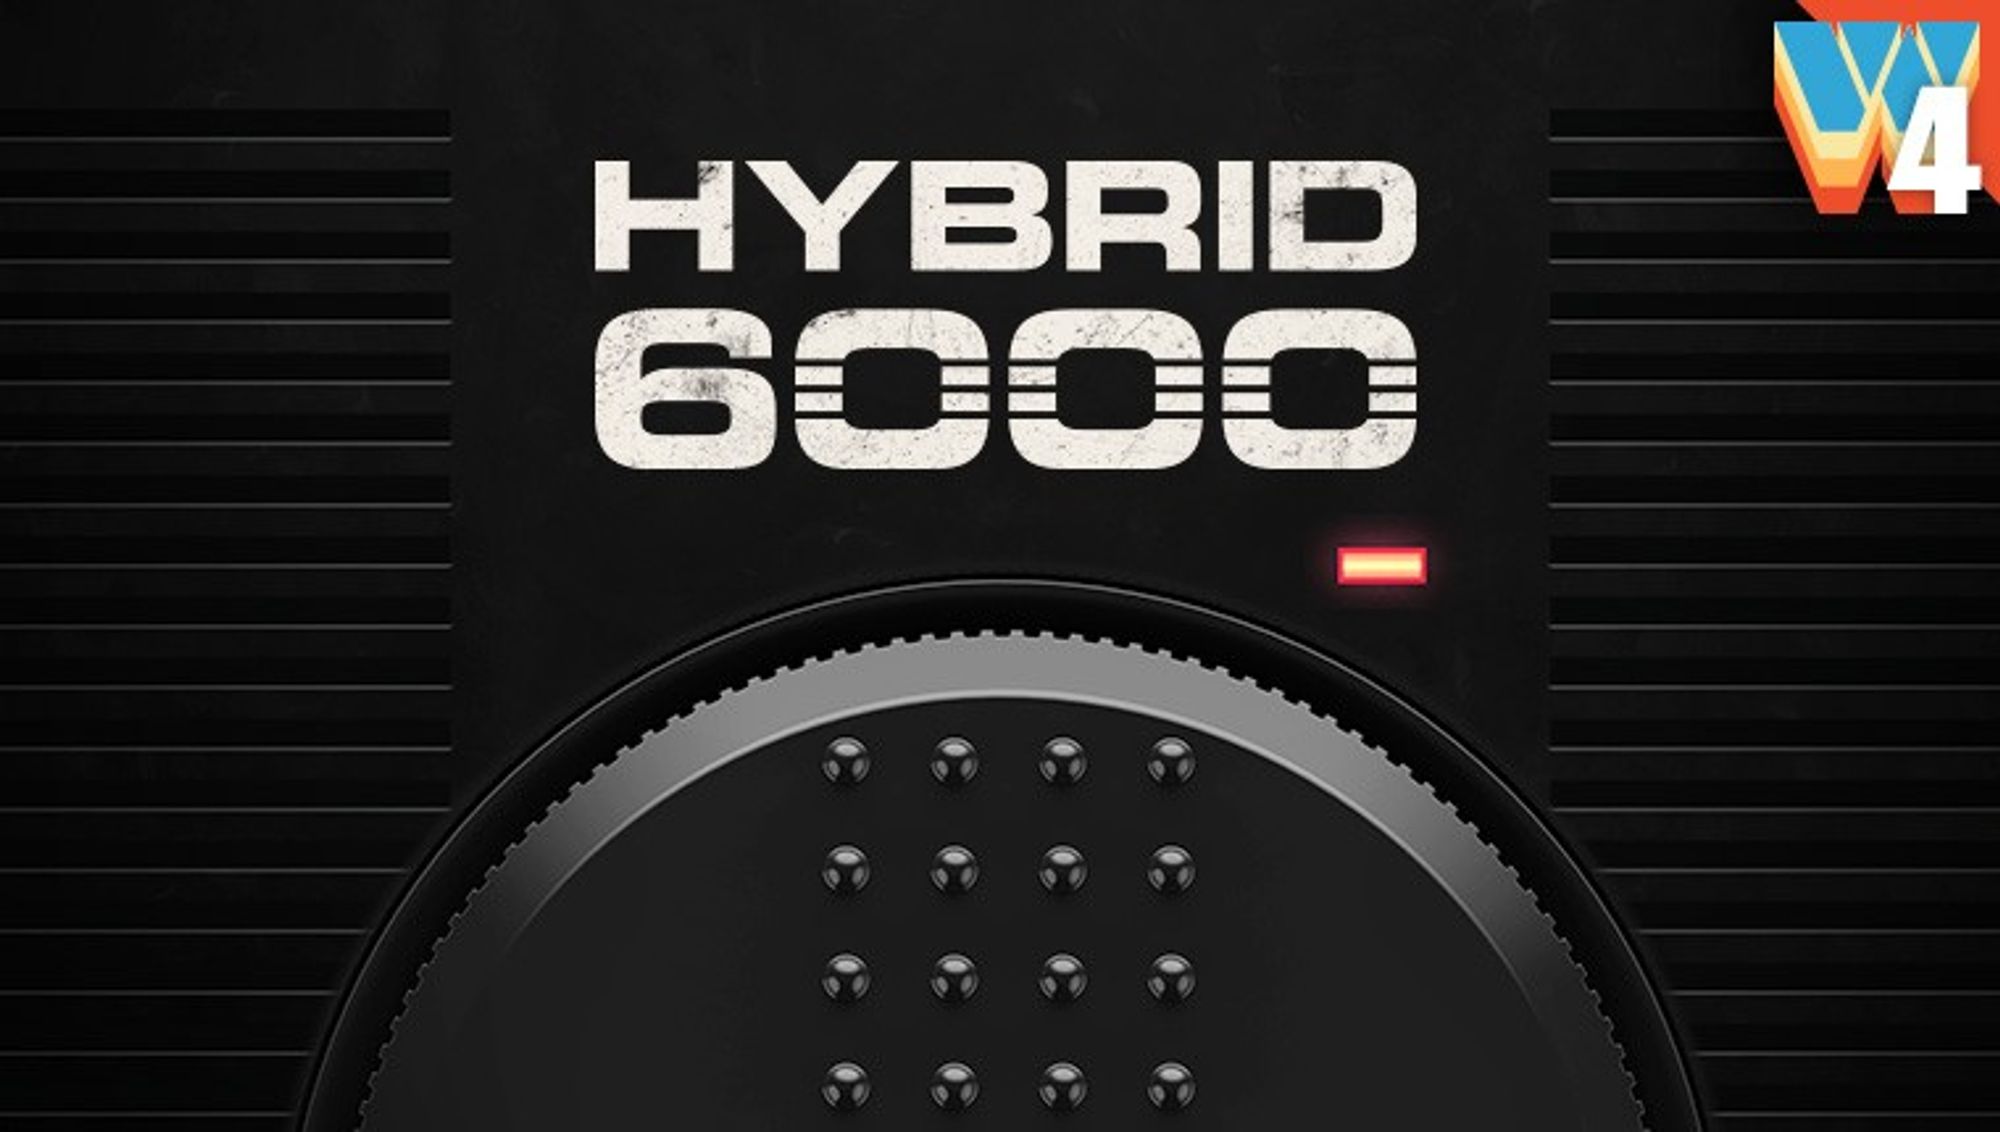 UVI Hybrid 6000 - Spectrum Dynamic Synthesis Workstation